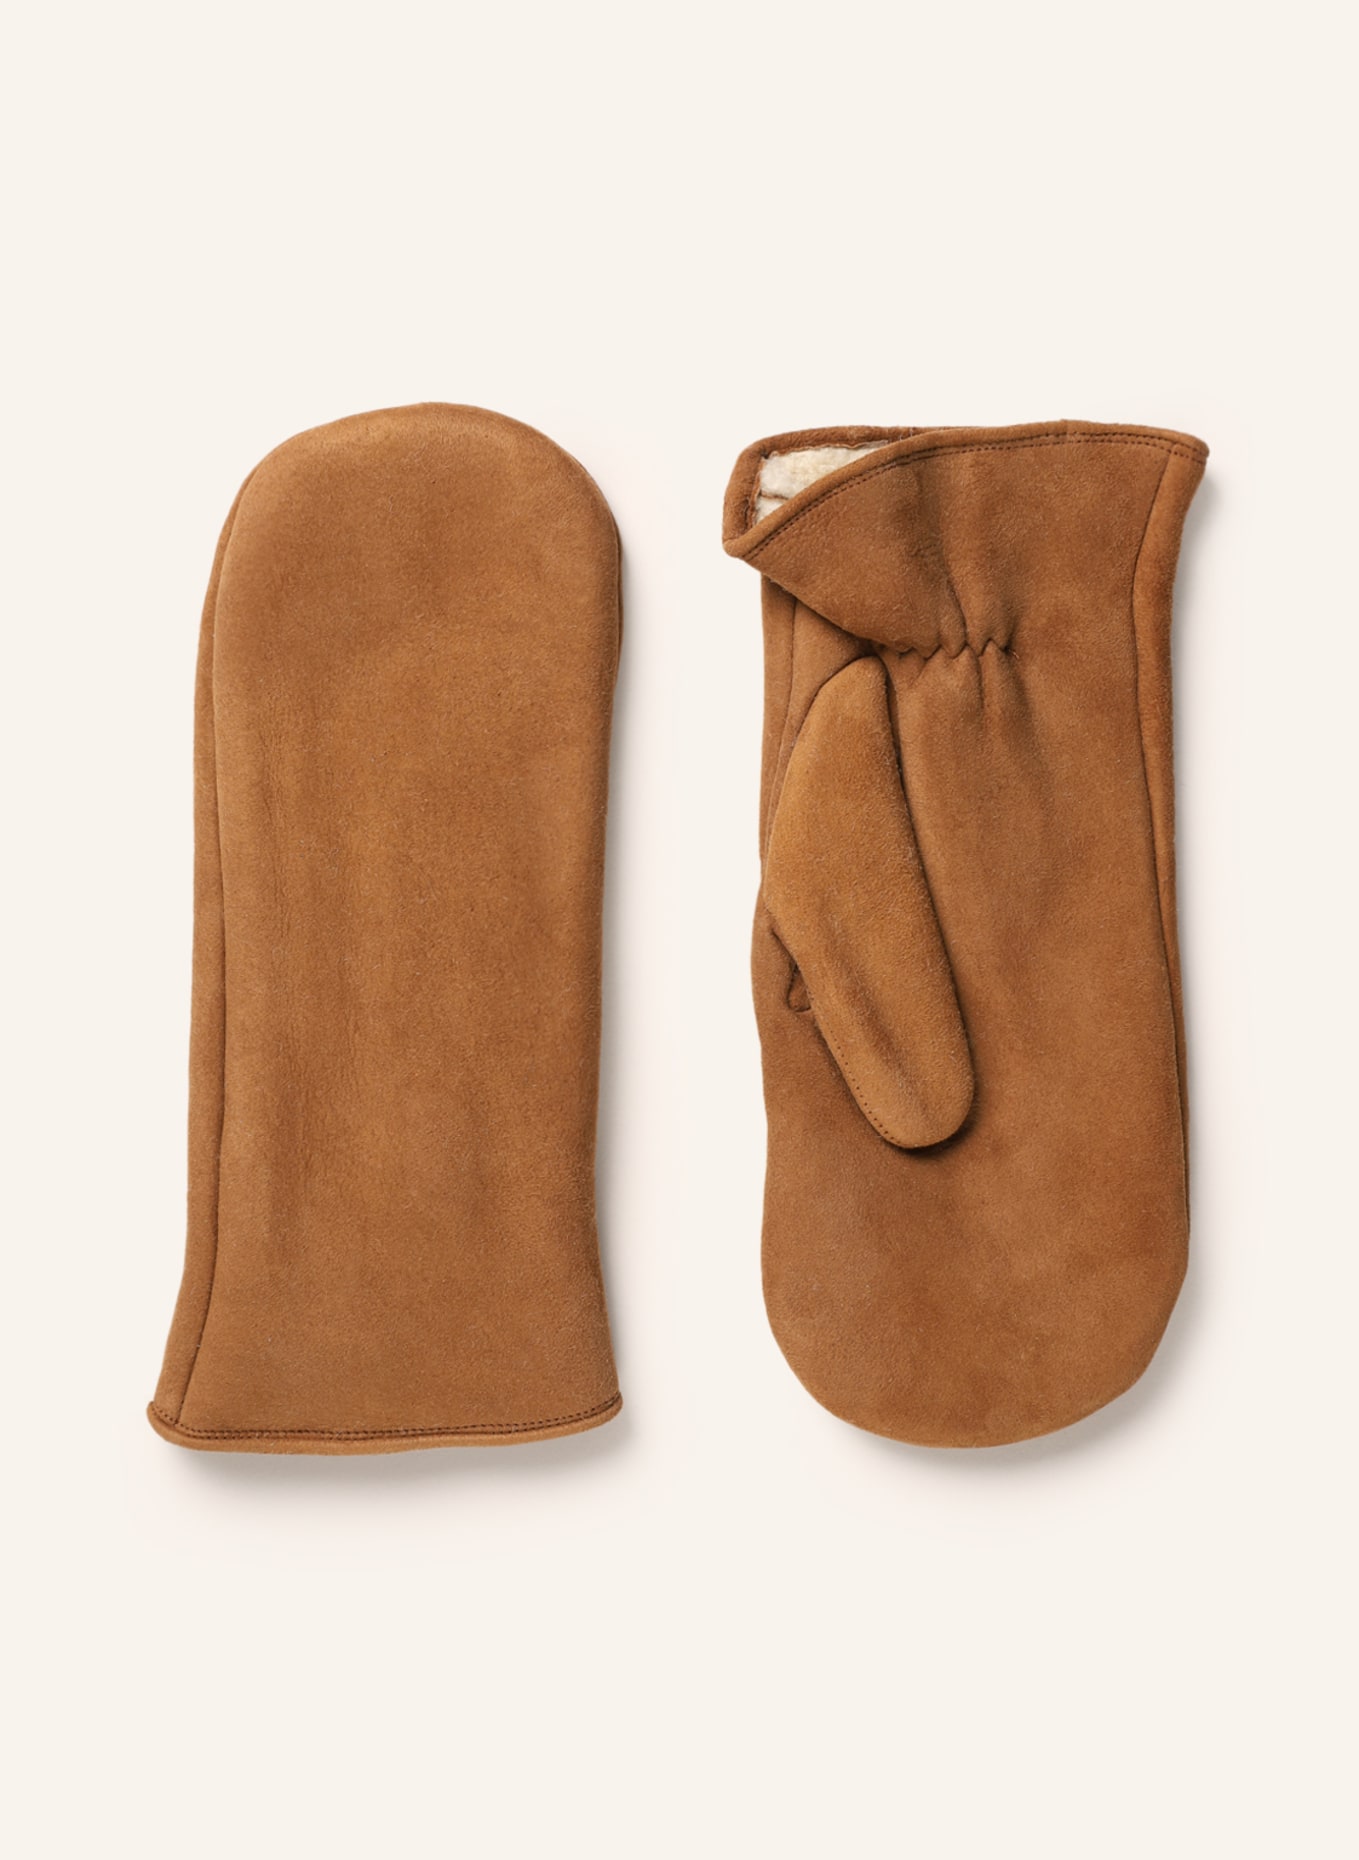 TR HANDSCHUHE WIEN Leather mittens, Color: COGNAC (Image 1)